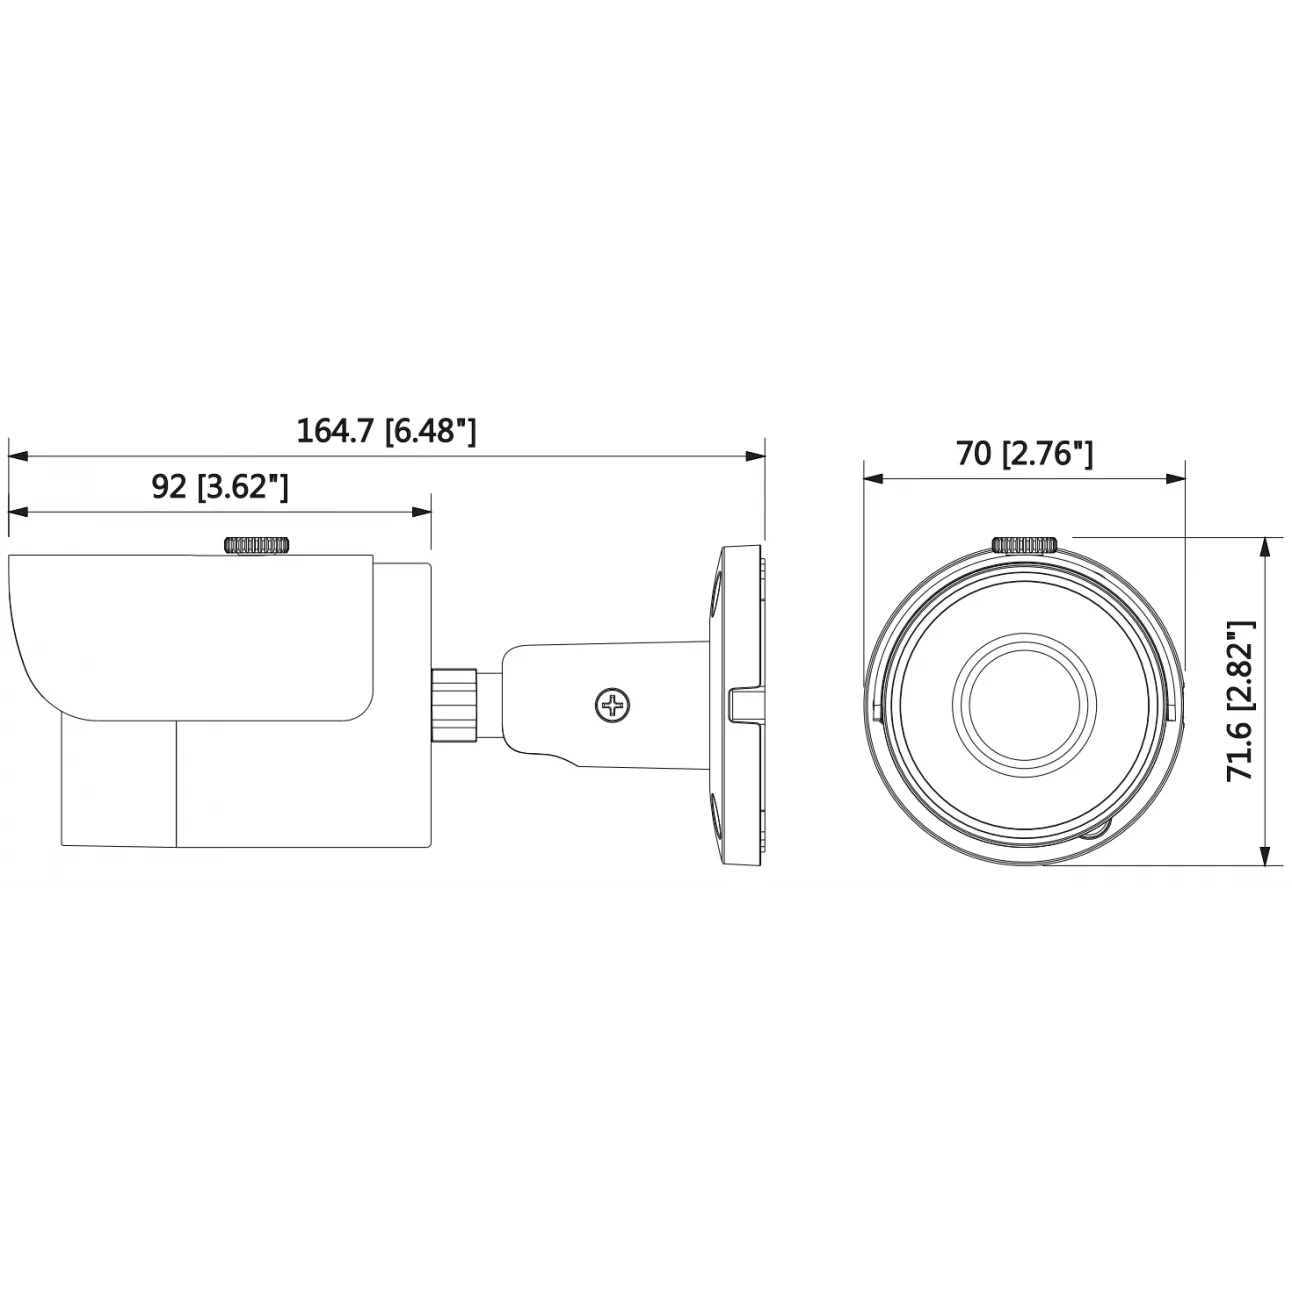 IP камера Dahua DH-IPC-HFW1220SP-0360B уличная мини 2 Мп, объектив 3.6 мм, ИК до 30 метров, PoE, IP67 (уценка)